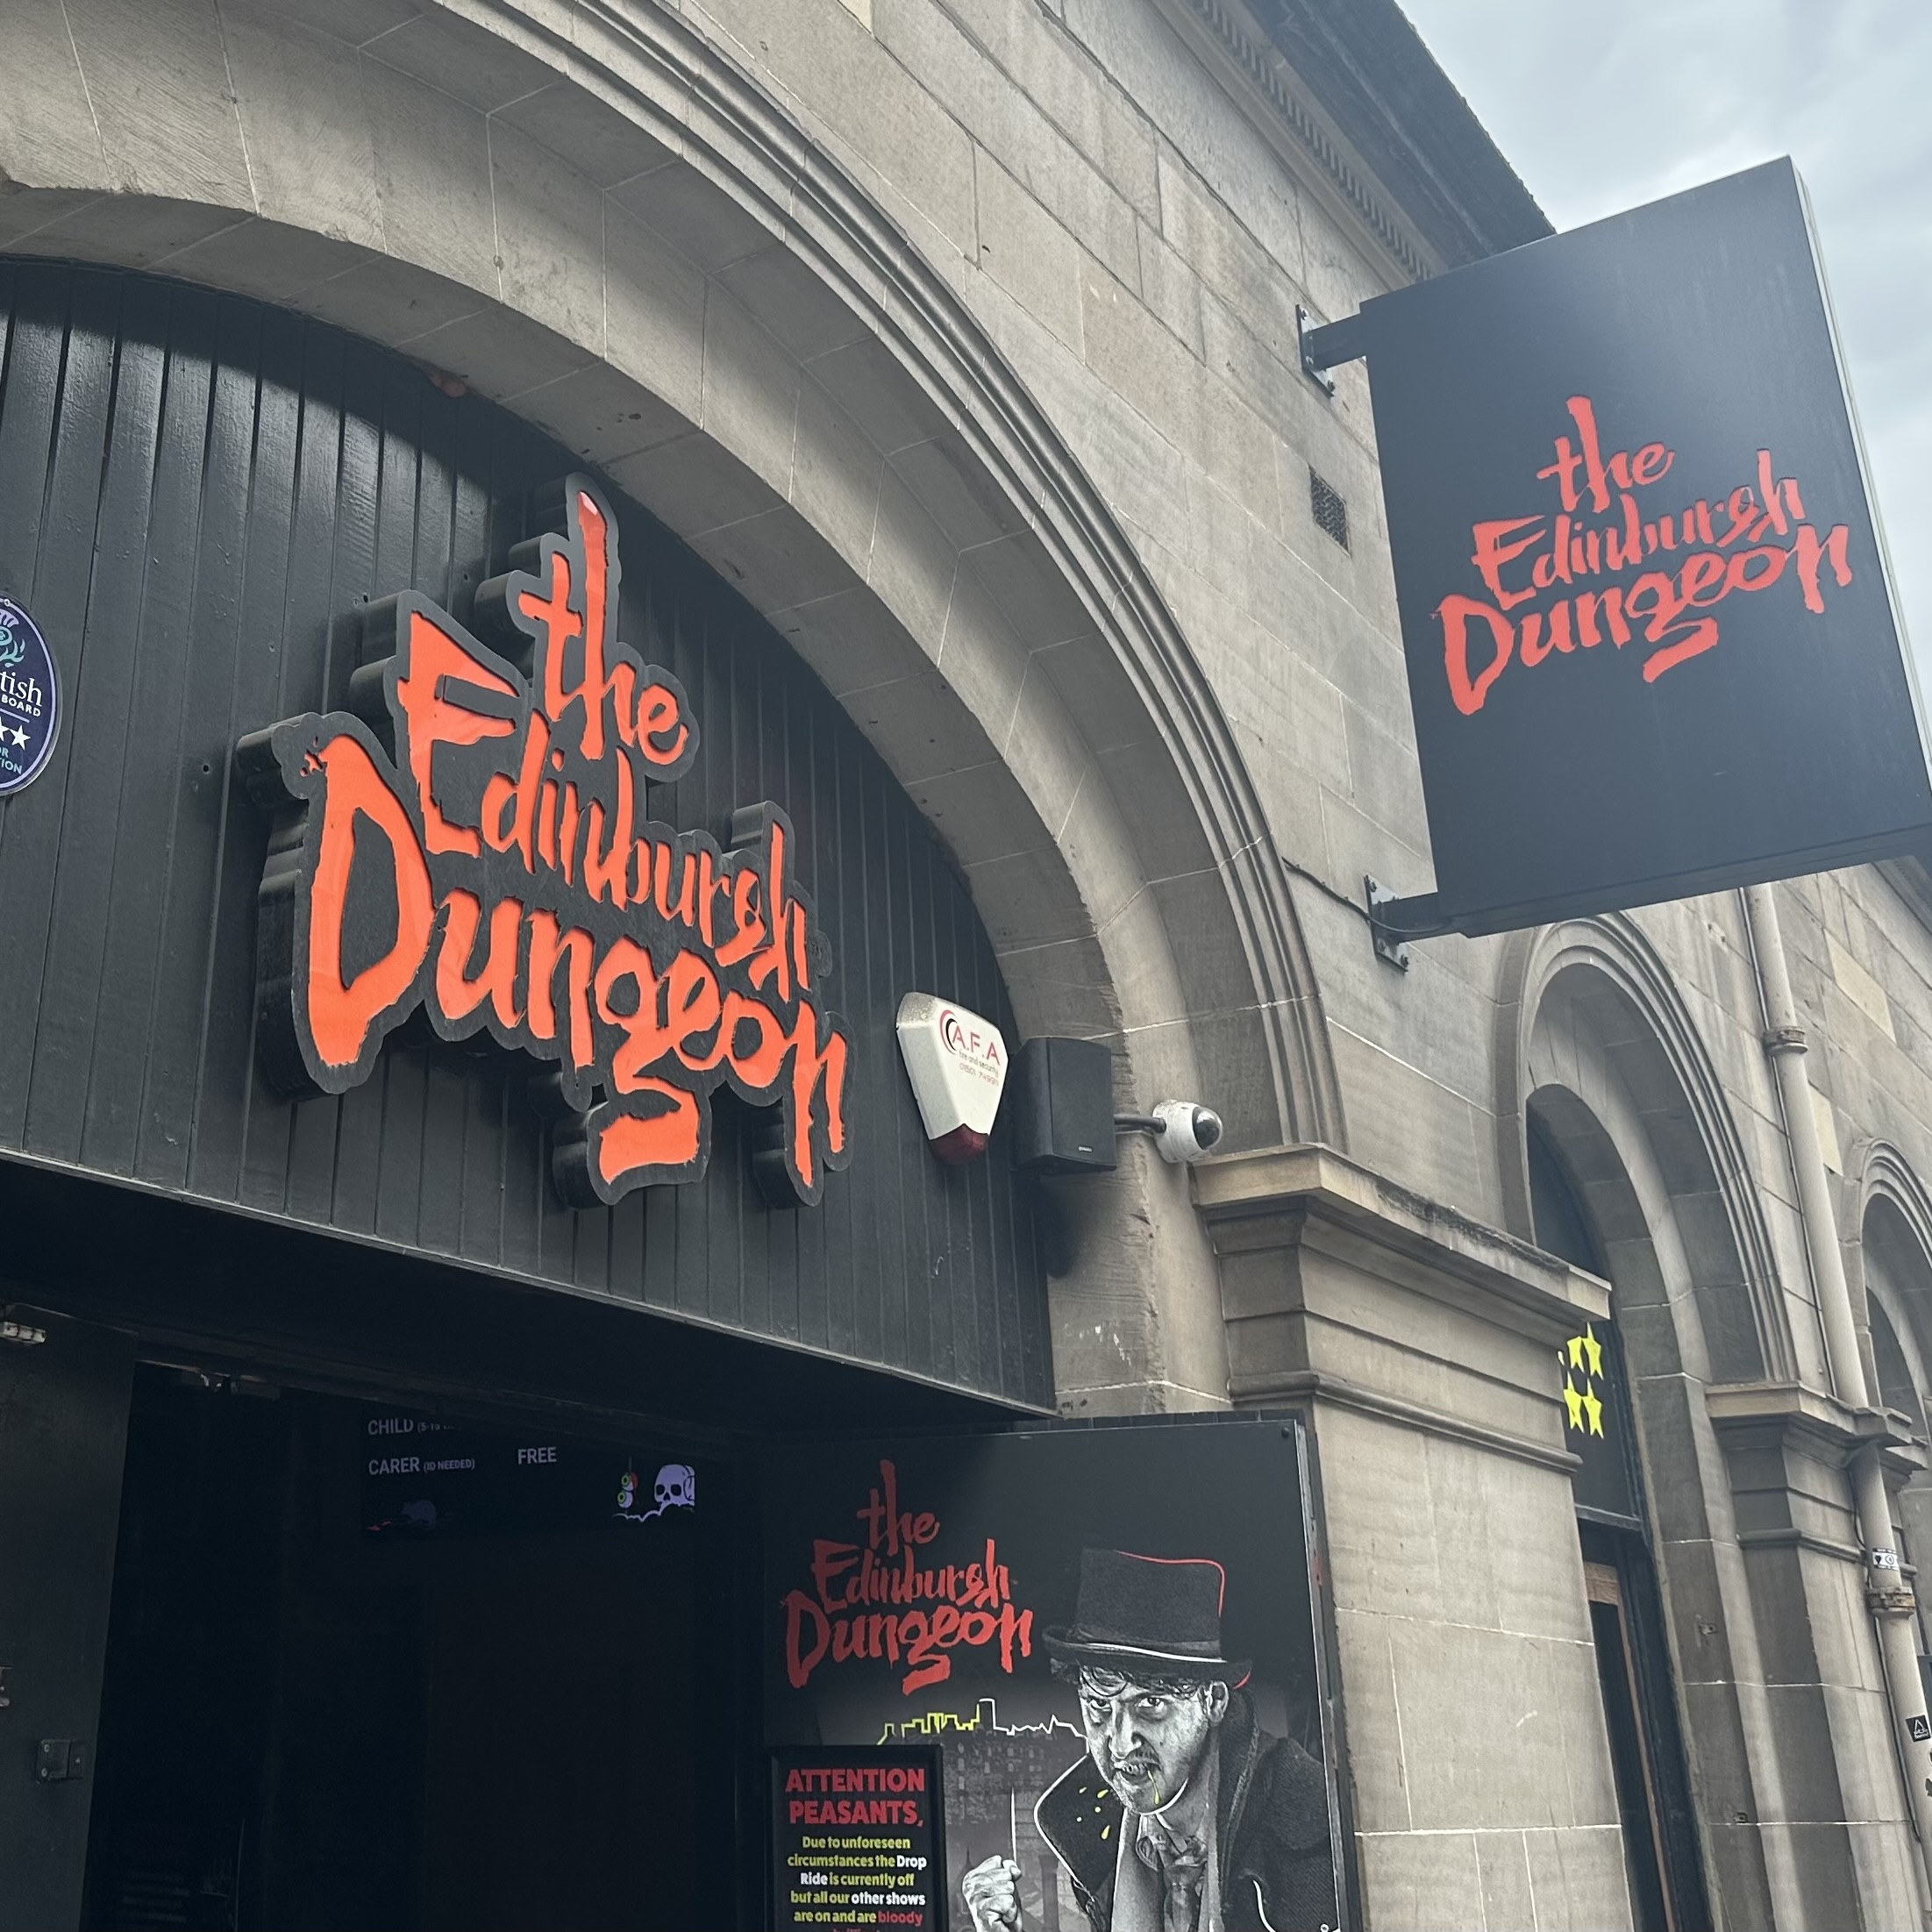 Edinburgh Dungeon entrance